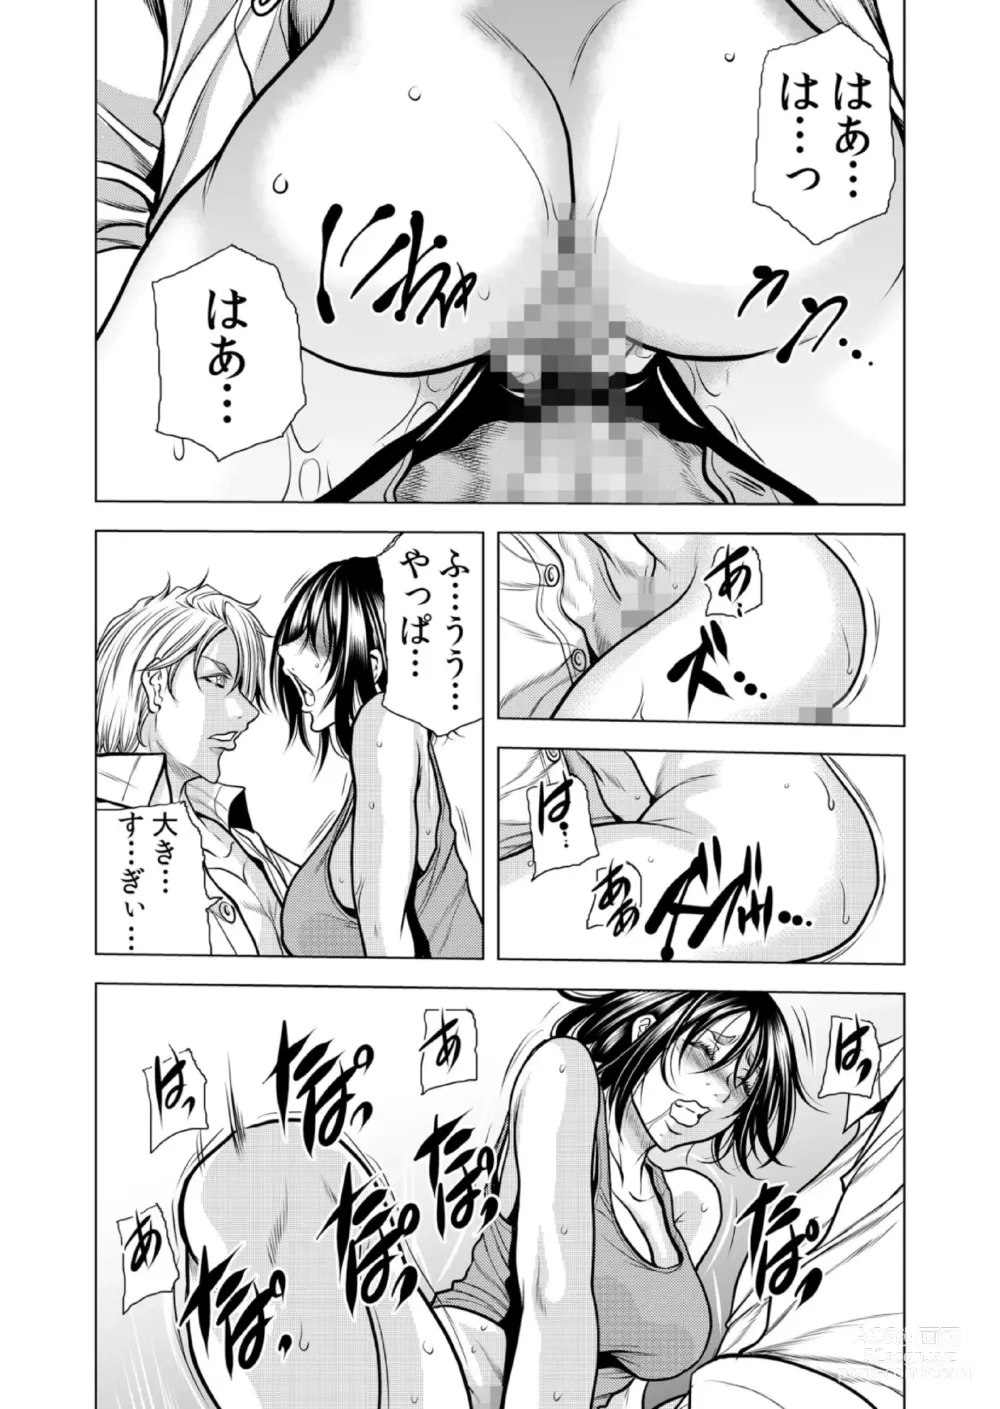 Page 62 of manga Mamasan,yobai ha OK desuka? VOL10